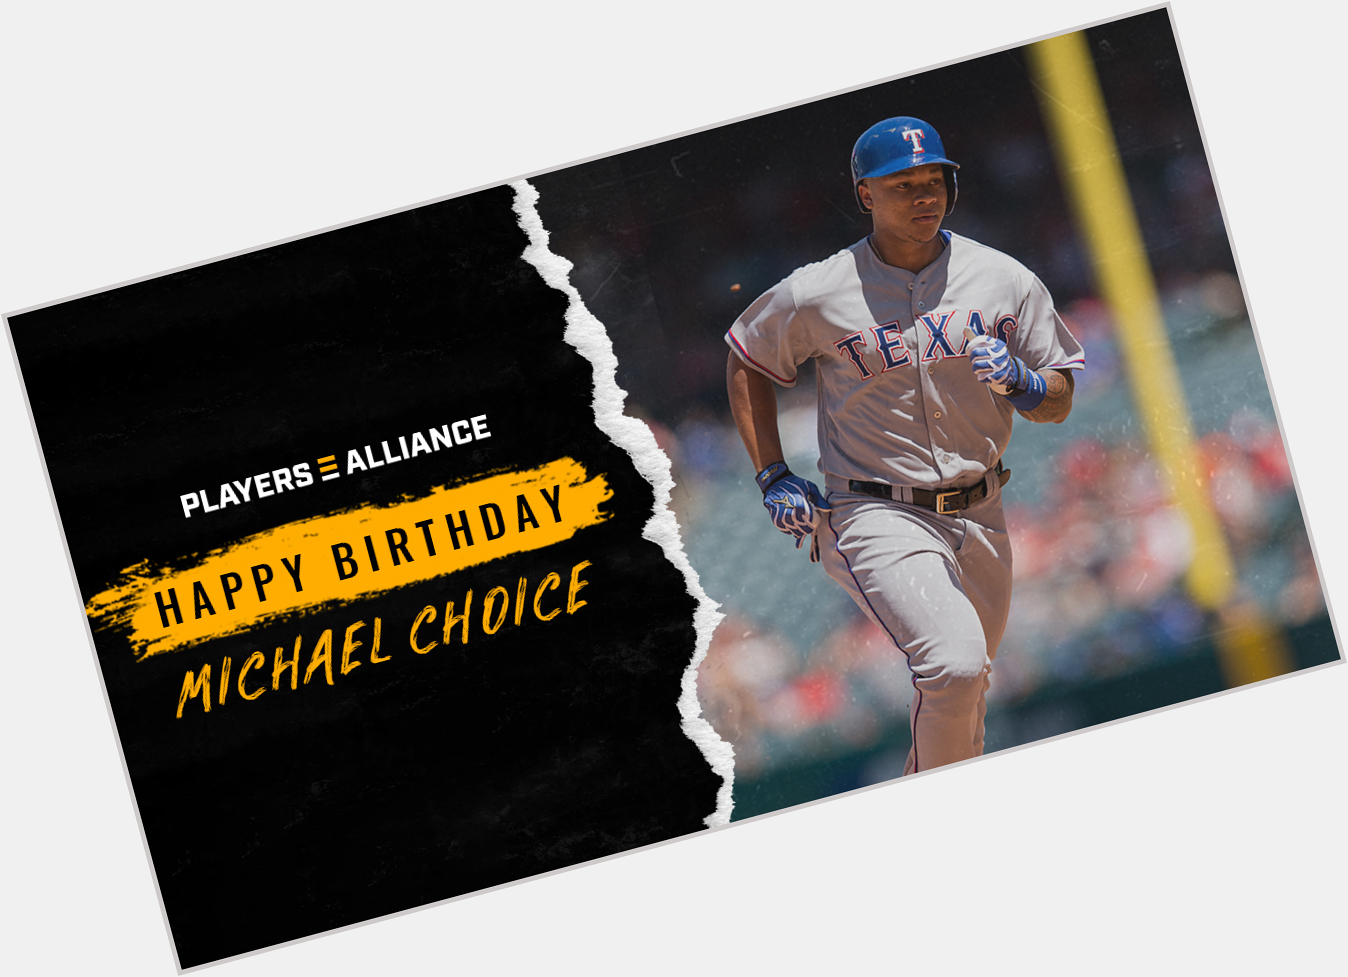 Wishing a very happy birthday to Michael Choice 